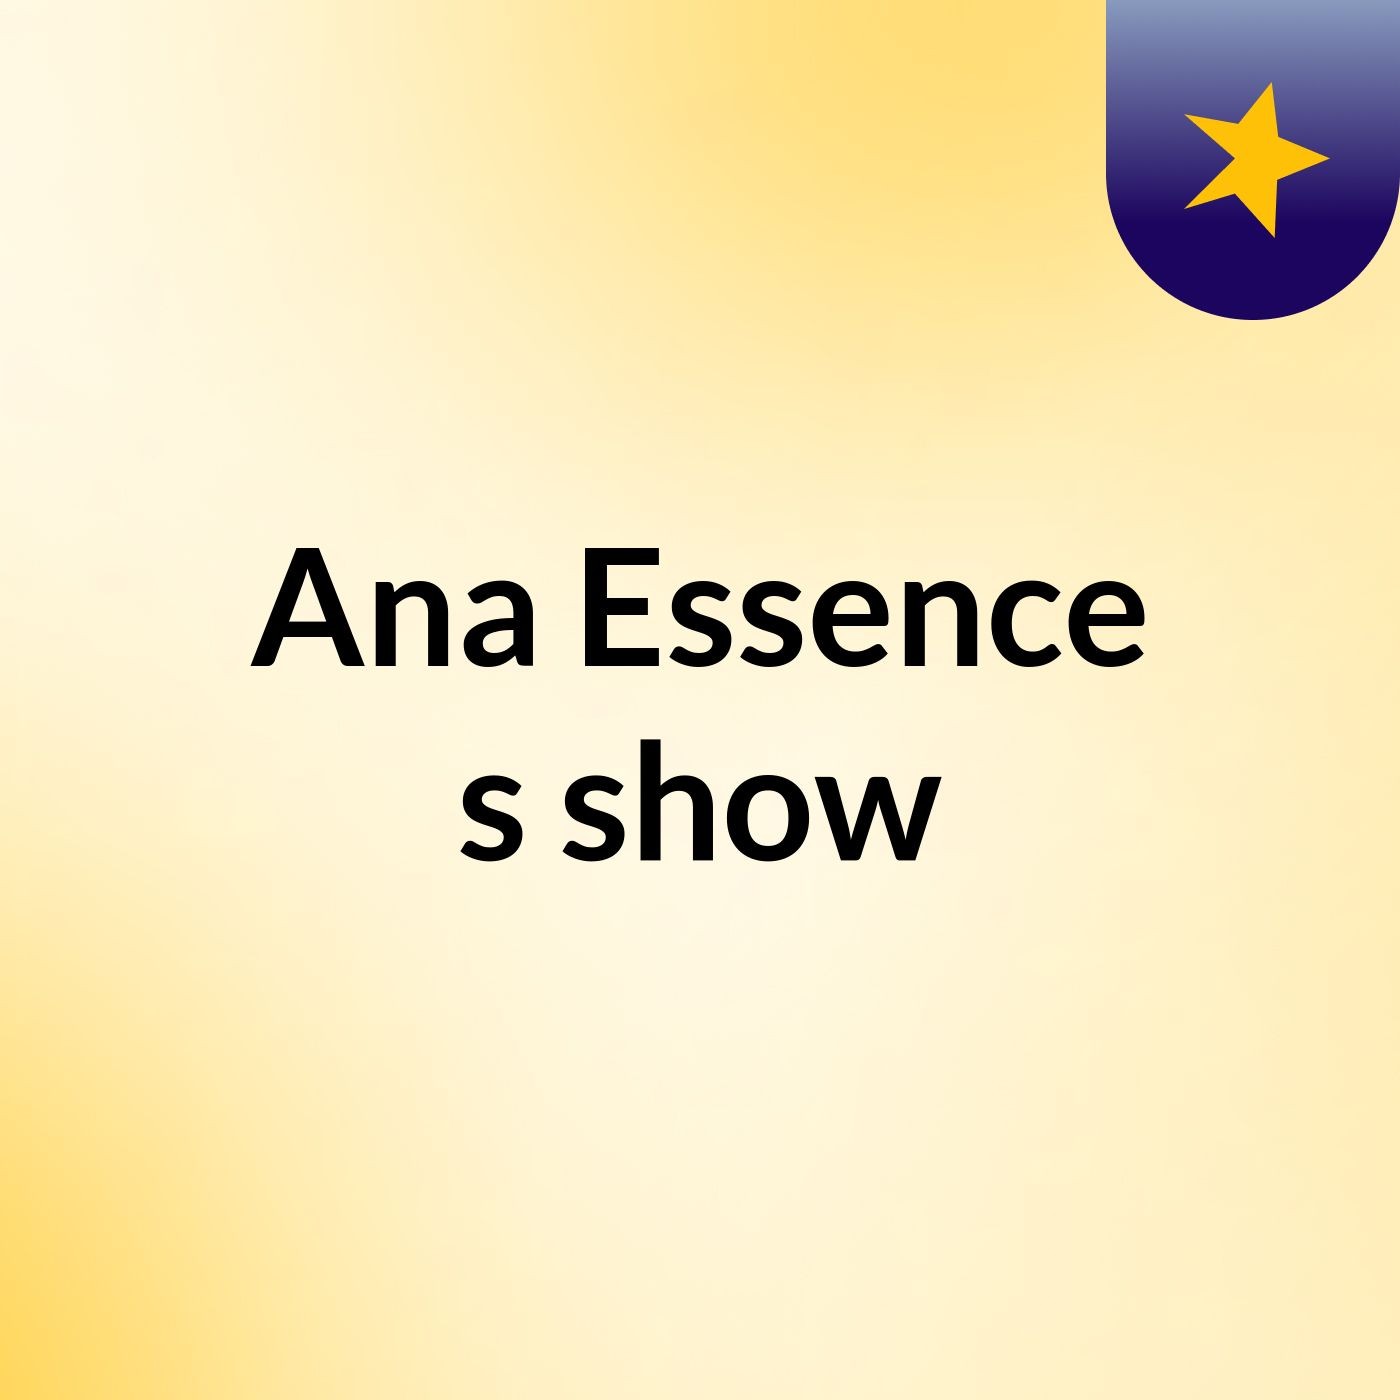 Ana Essence's show